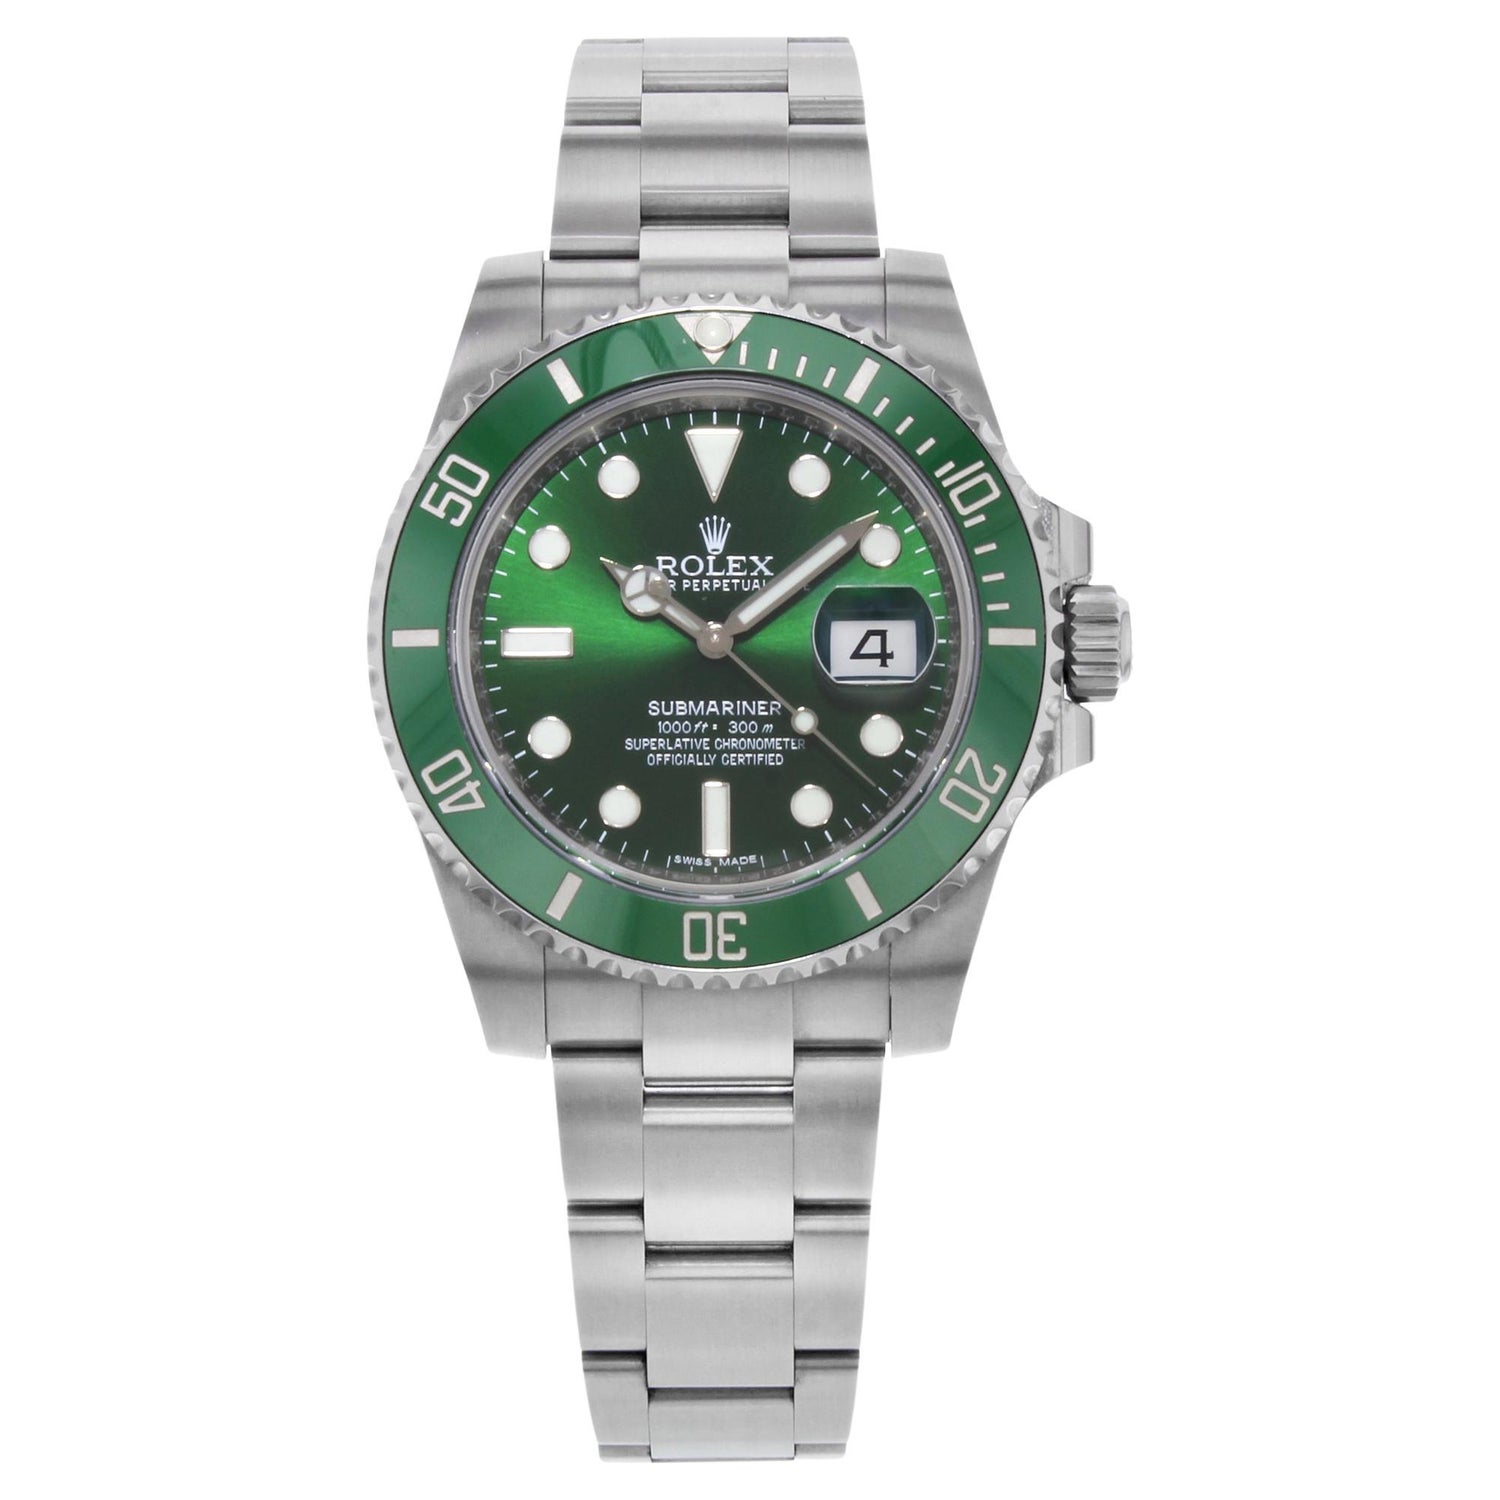 Submariner 116610LV Hulk Green Steel Automatic Watch at 1stDibs